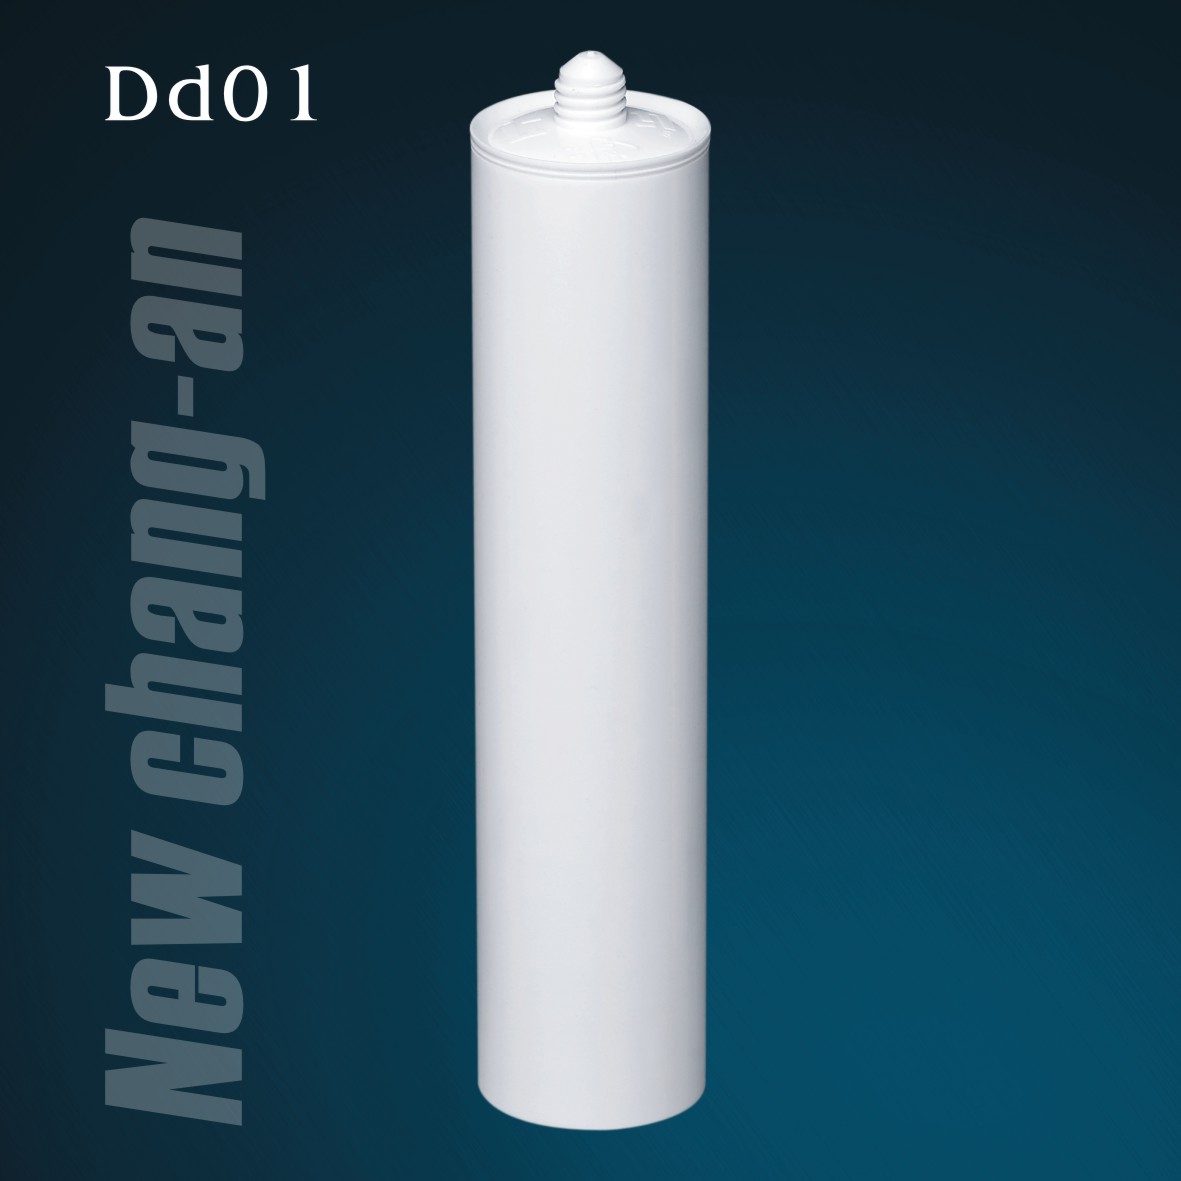 Hộp mực nhựa HDPE rỗng 300ml cho keo silicone Dd01